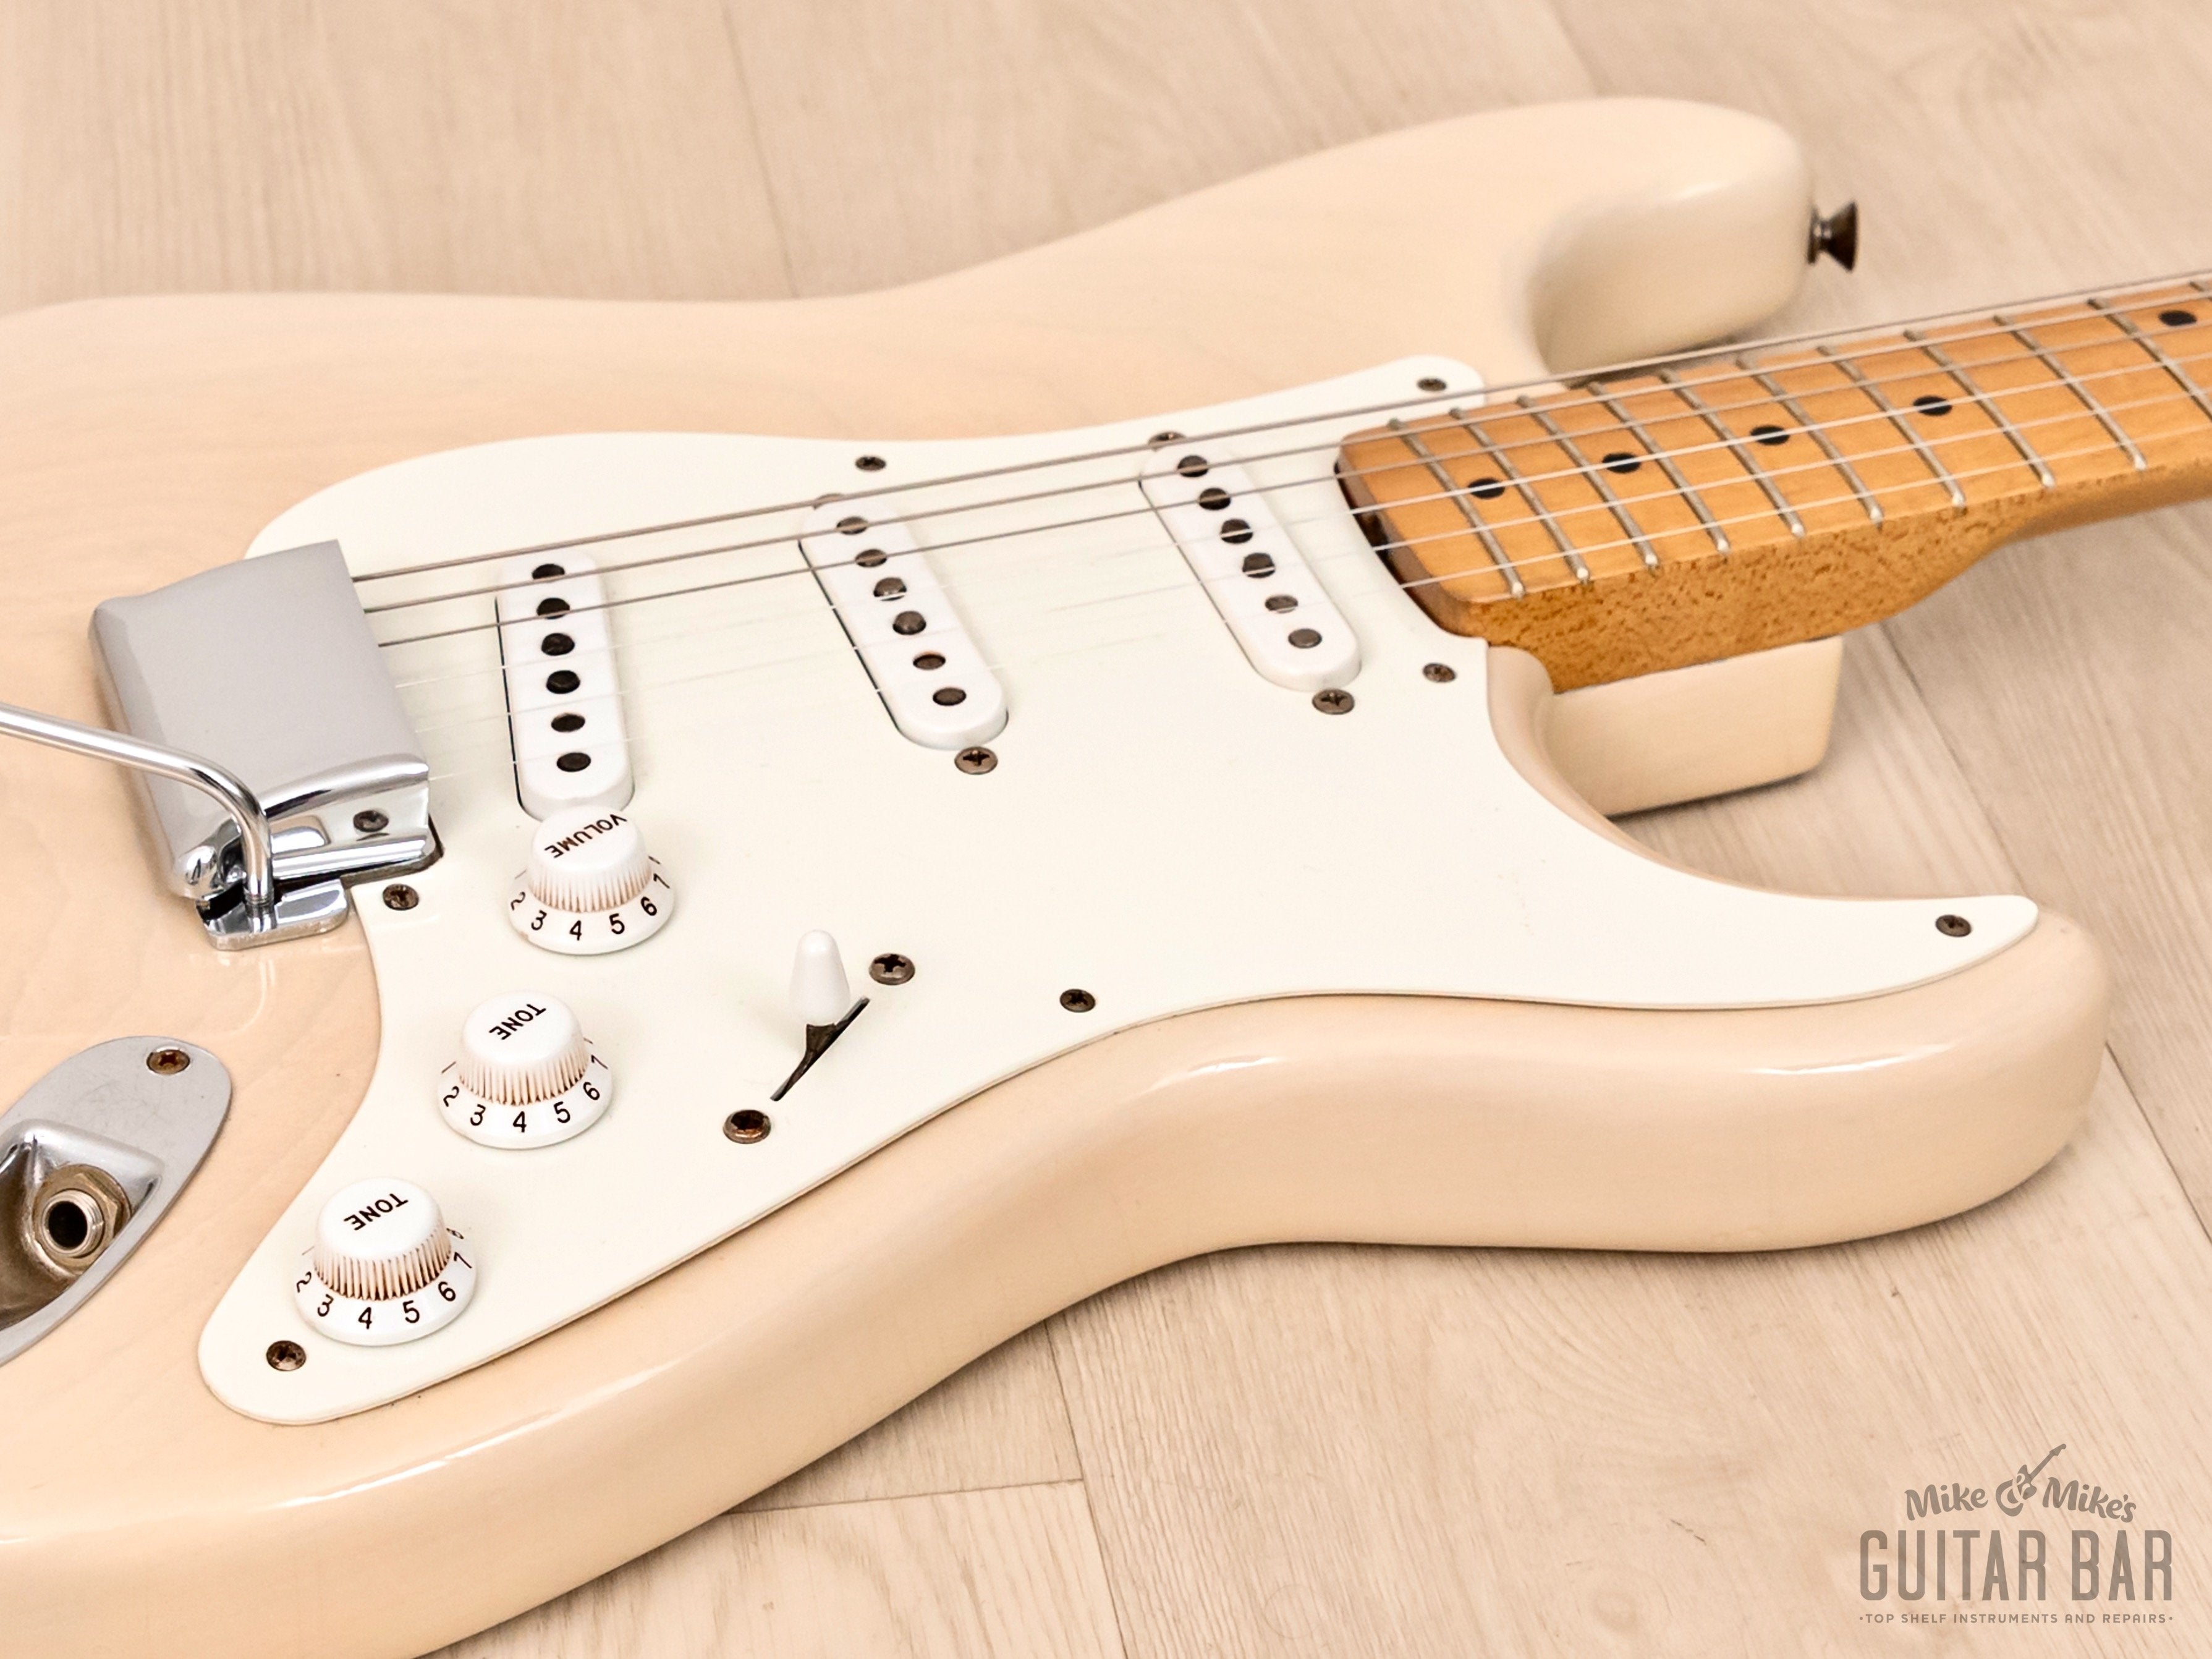 1955 Fender Stratocaster Vintage Electric Guitar Blonde, One-Piece Ash Body